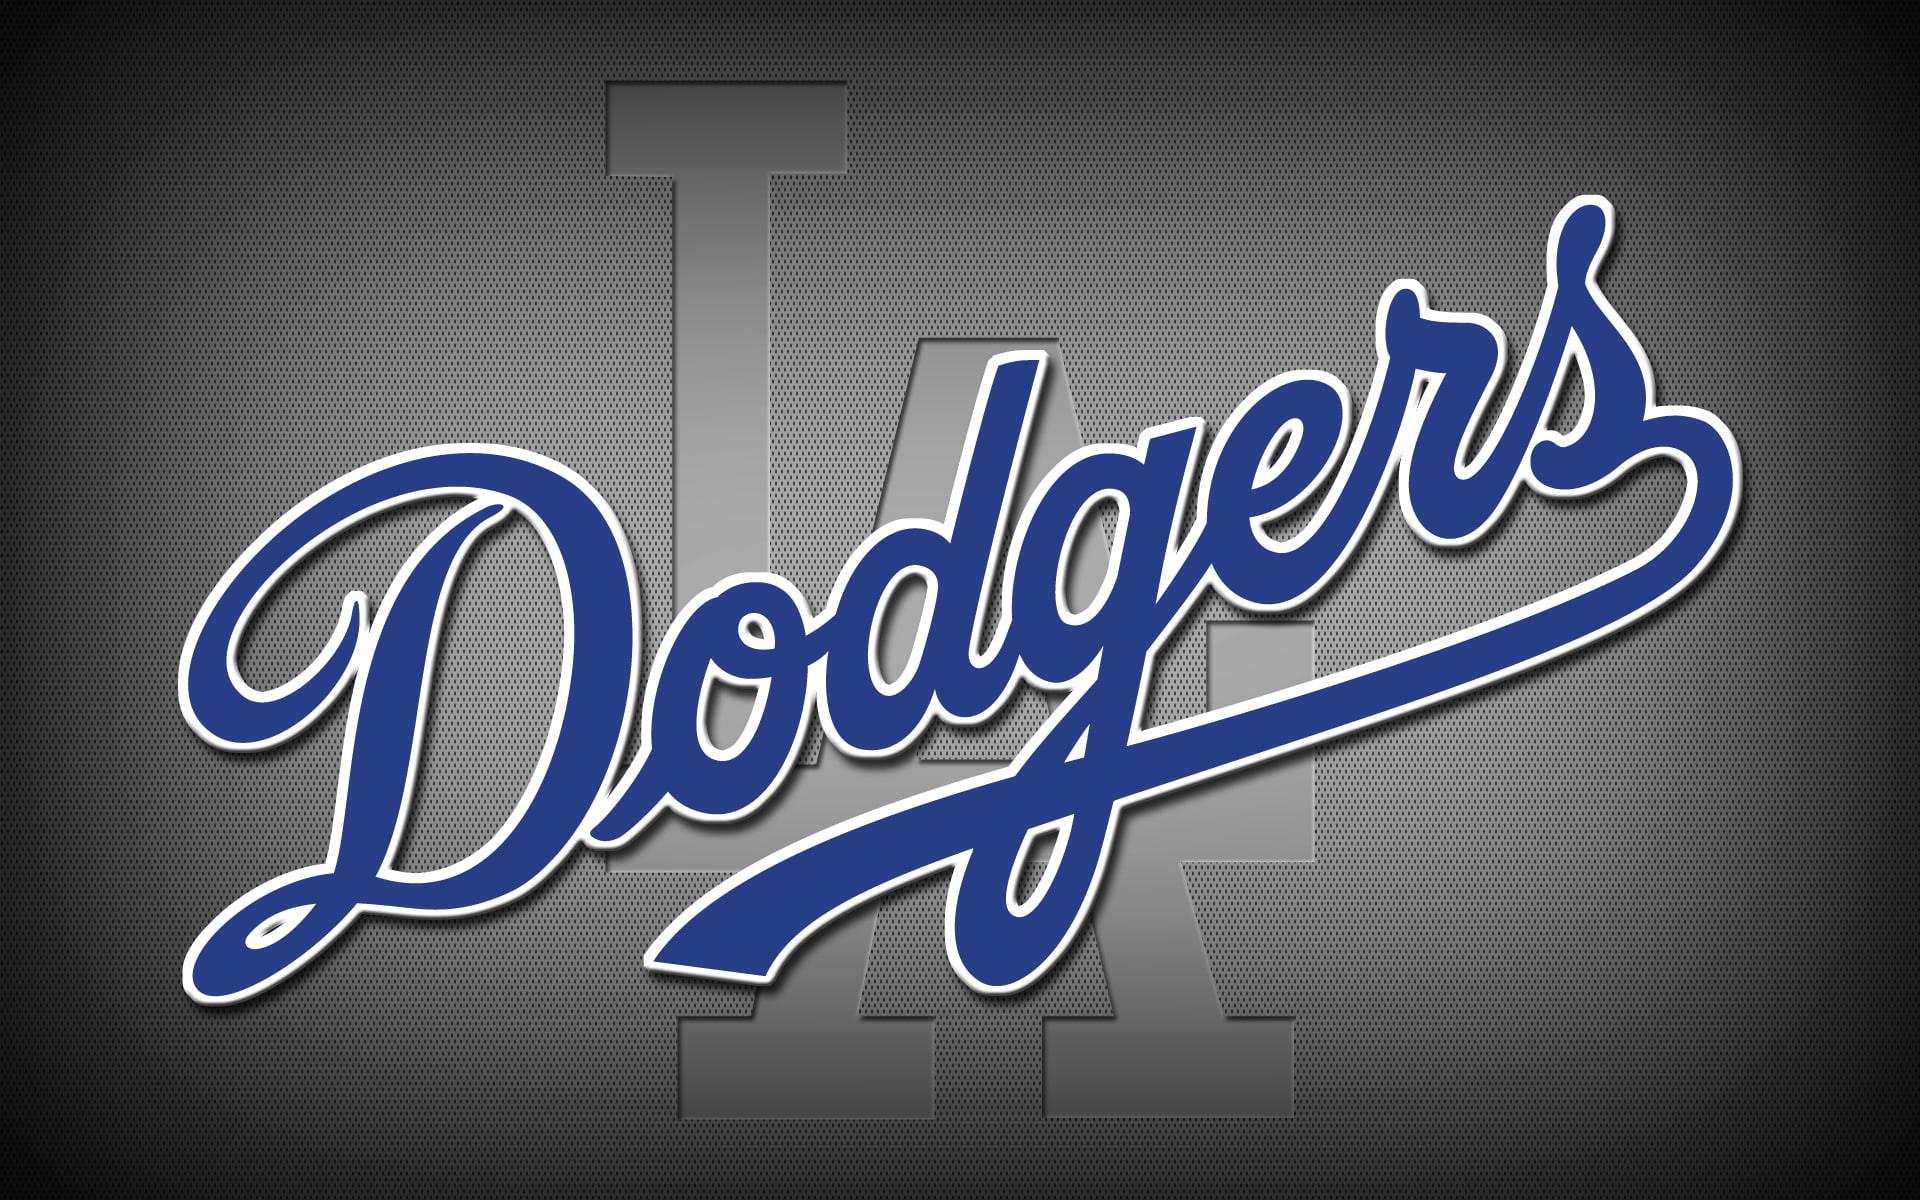 Los Angeles Dodgers Solid Blue Wallpaper